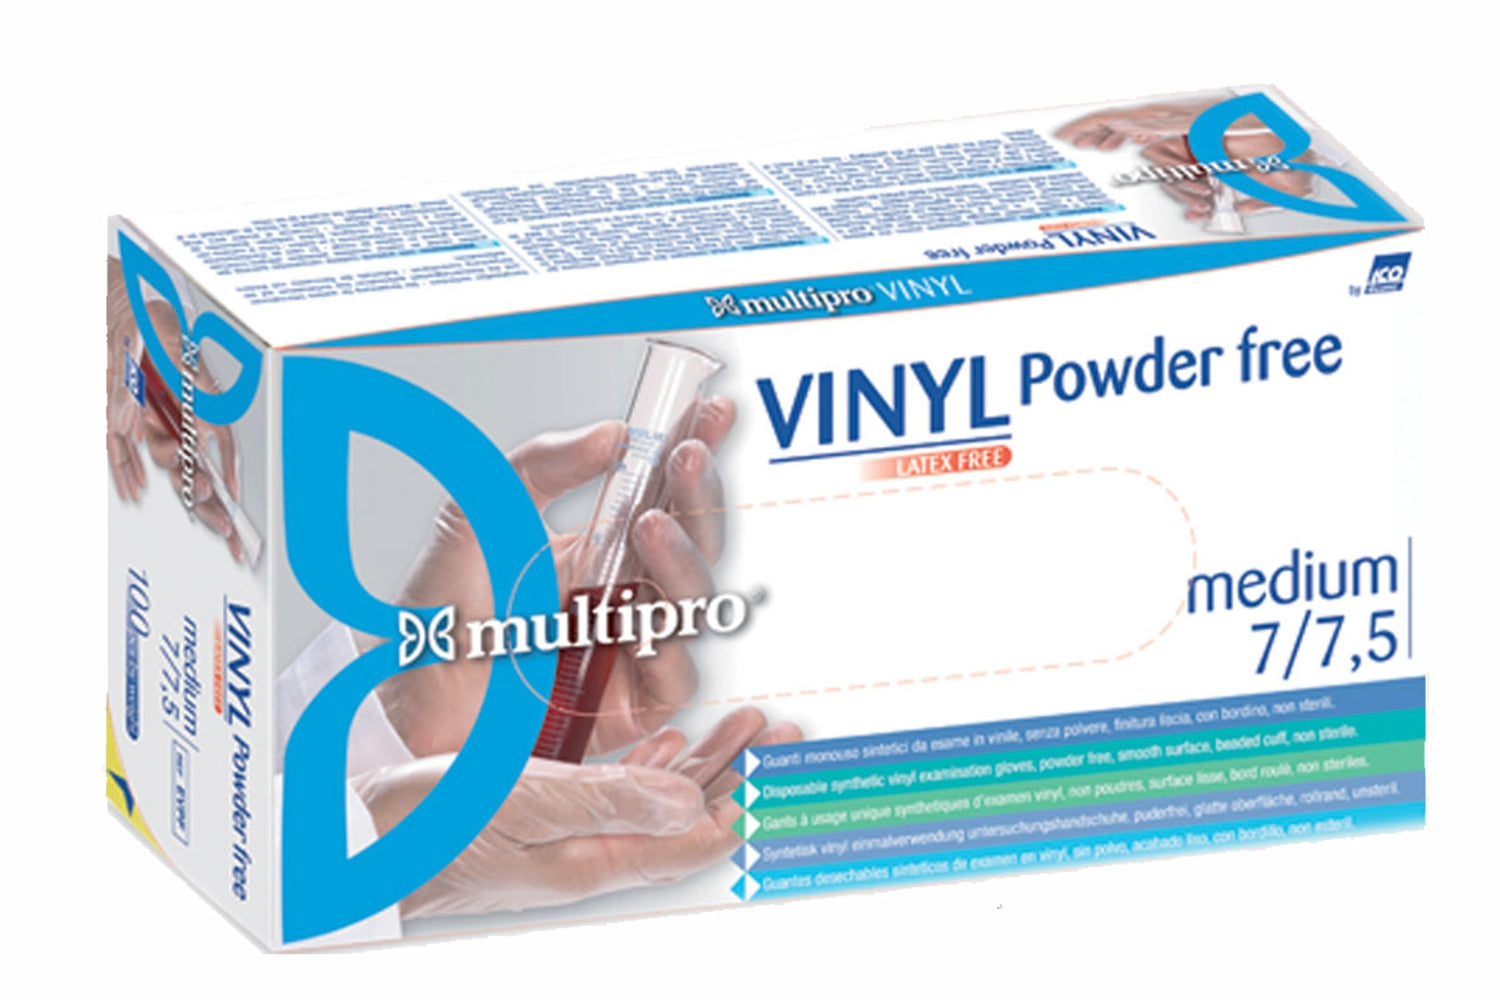 Vinyl Powder free Multipro guanti monouso in vinile senza polvere icoguanti